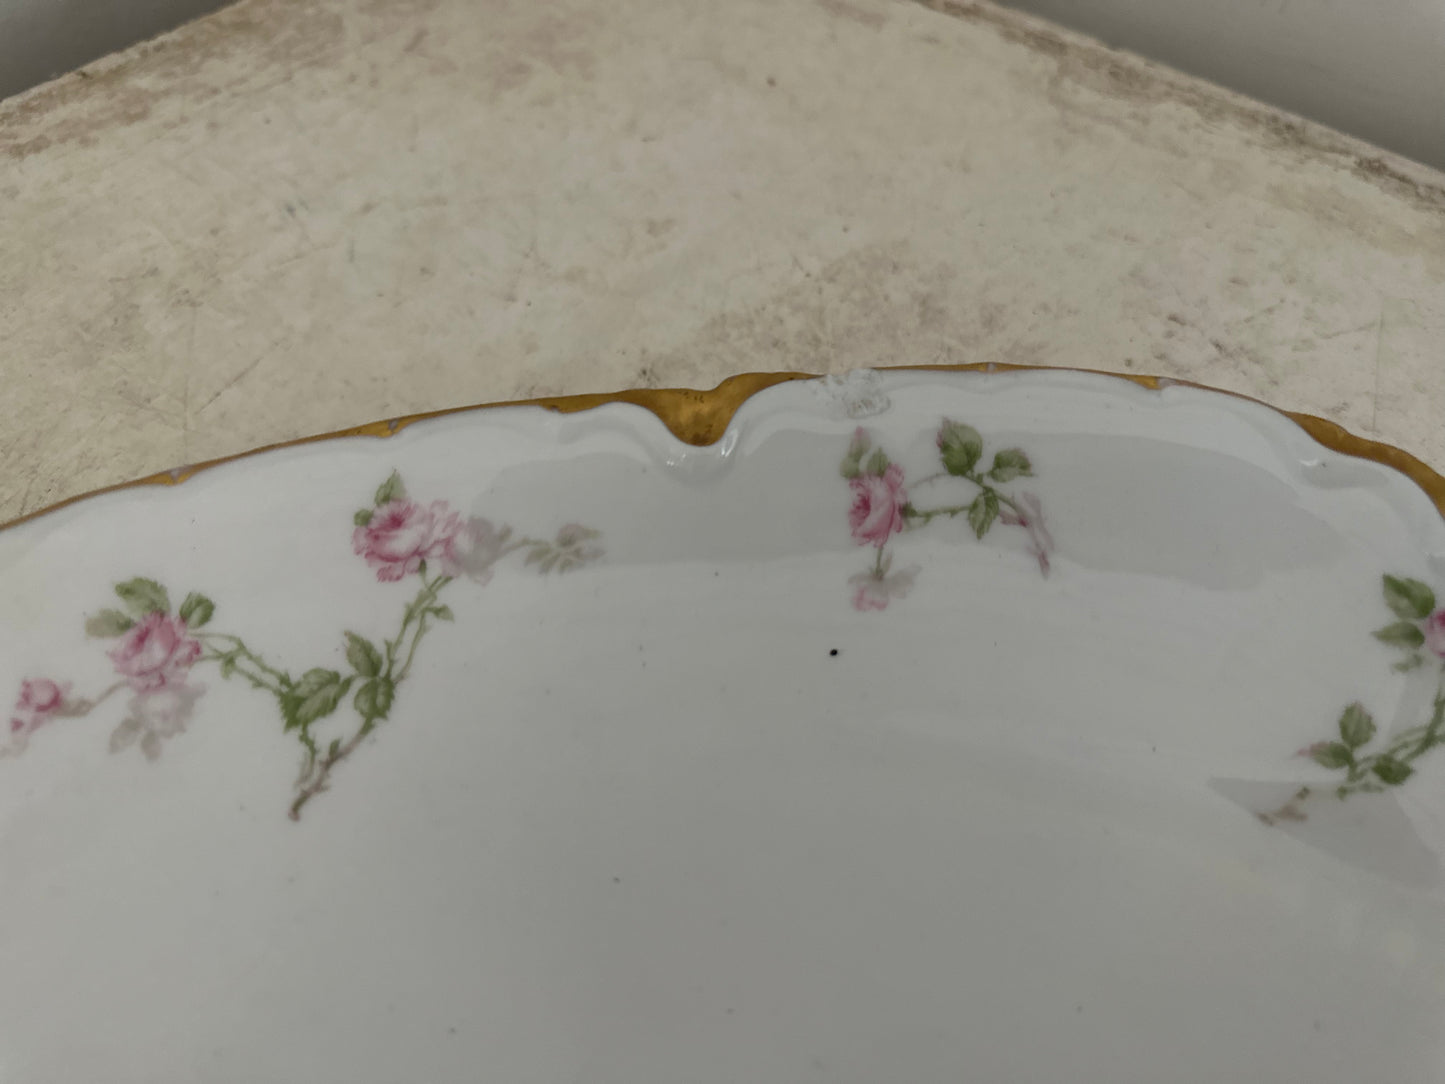 Antique Haviland Limoges Serving Bowl Gold Gild Pink Roses Wheat Sheaf c. 1884-1931 - Has chip as shown